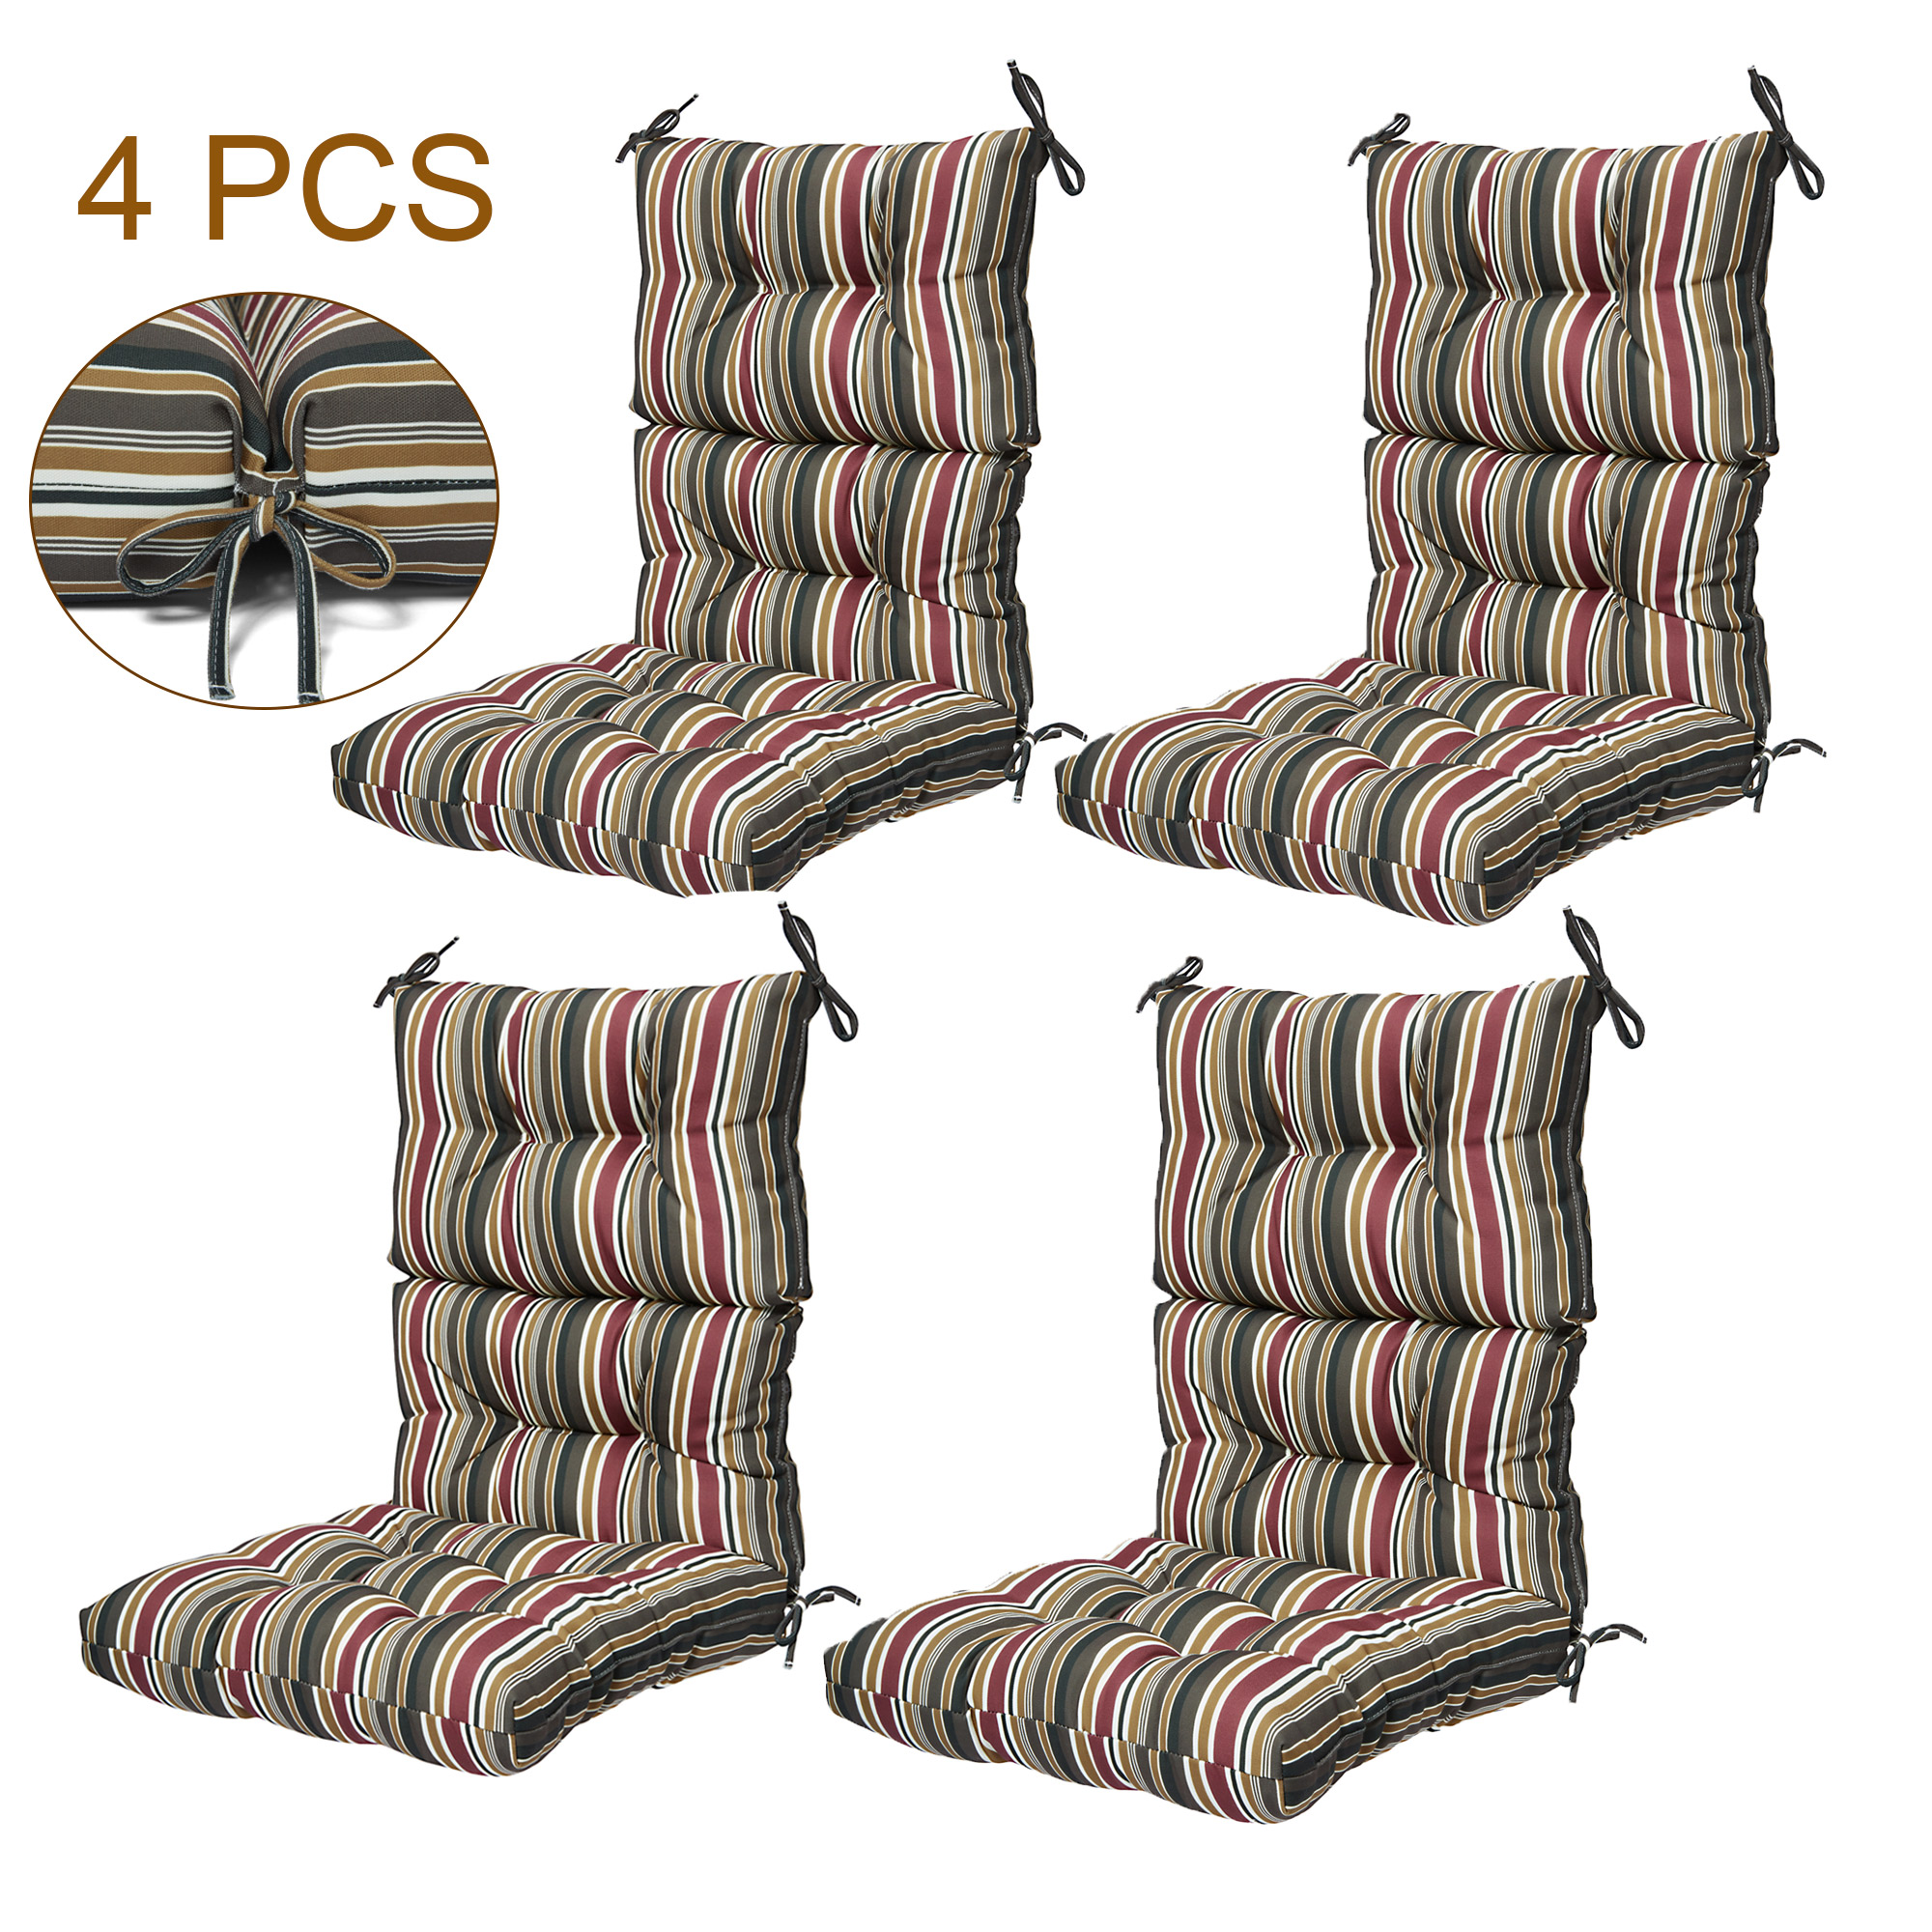 44x21 inch Outdoor Chair Cushion, 2/4pcs High Back Chair Cushions Patio Garden High Rebound Foam Chair Cushion Waterproof Polyester Seat Cushions or Home Patio Garden Decor - image 1 of 6